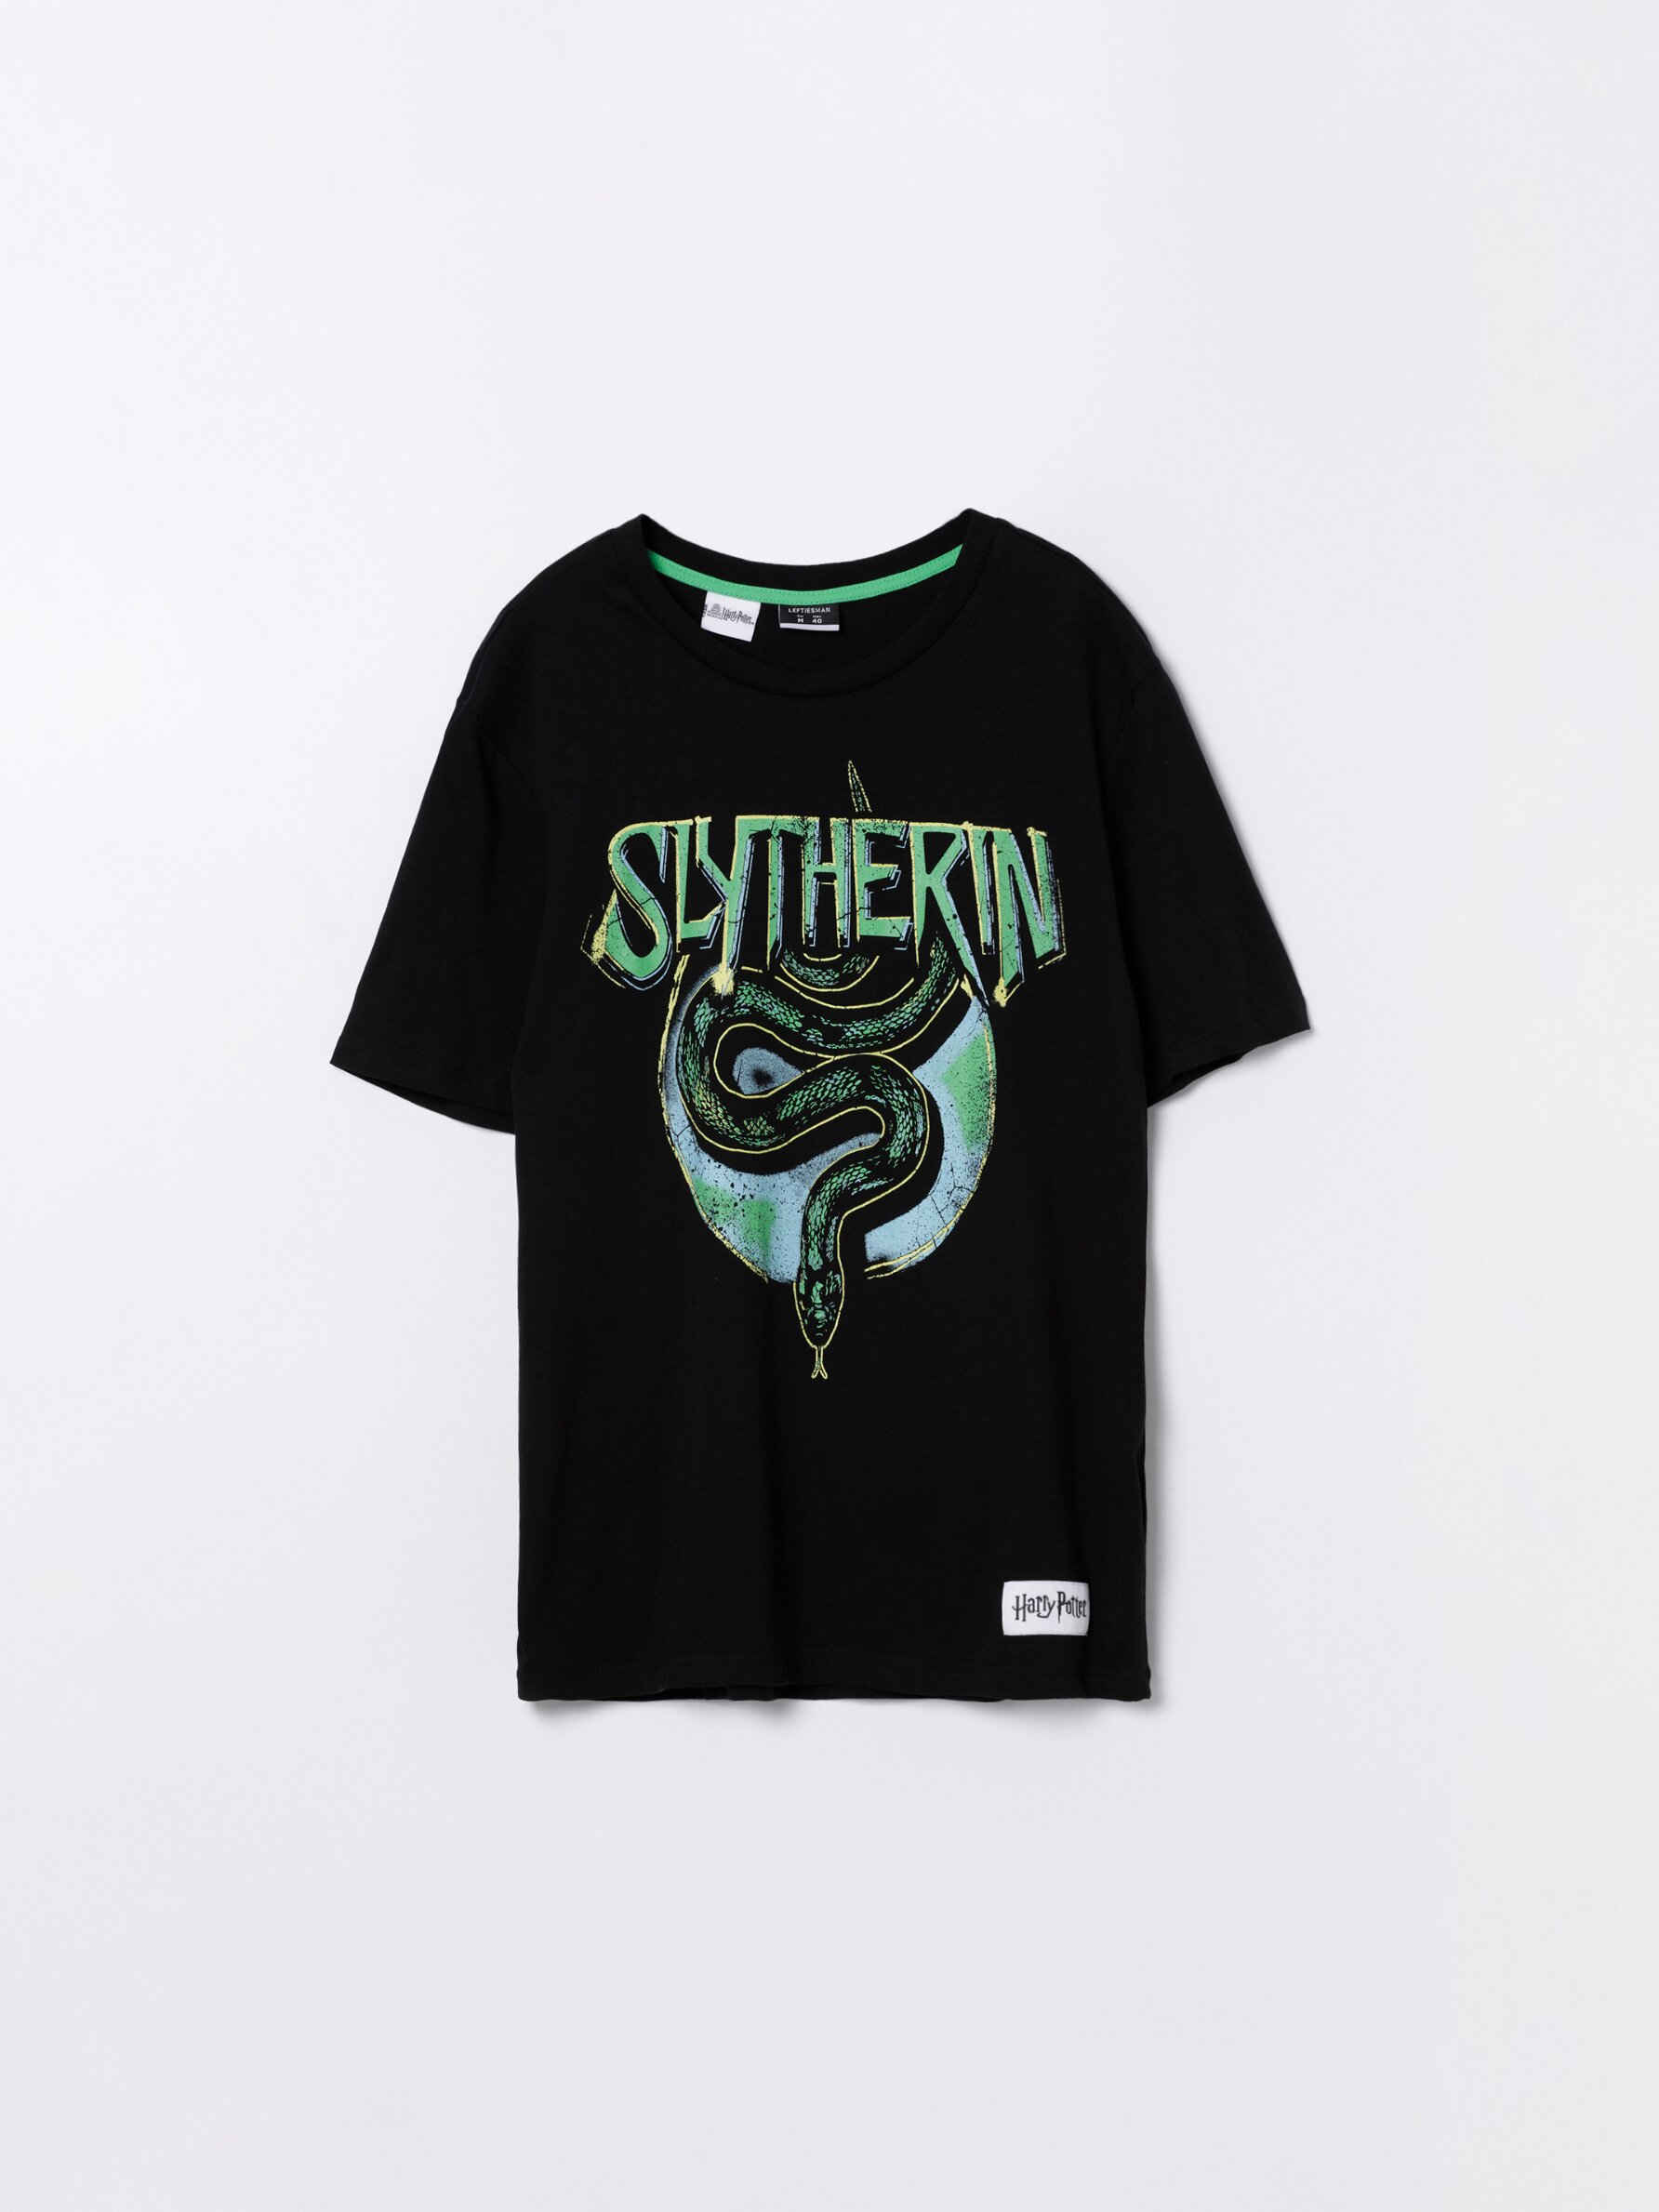 Camiseta maxiprint Slytherin Potter © &™ WARNER BROS - CAMISETAS - HOMBRE | Lefties Mexico